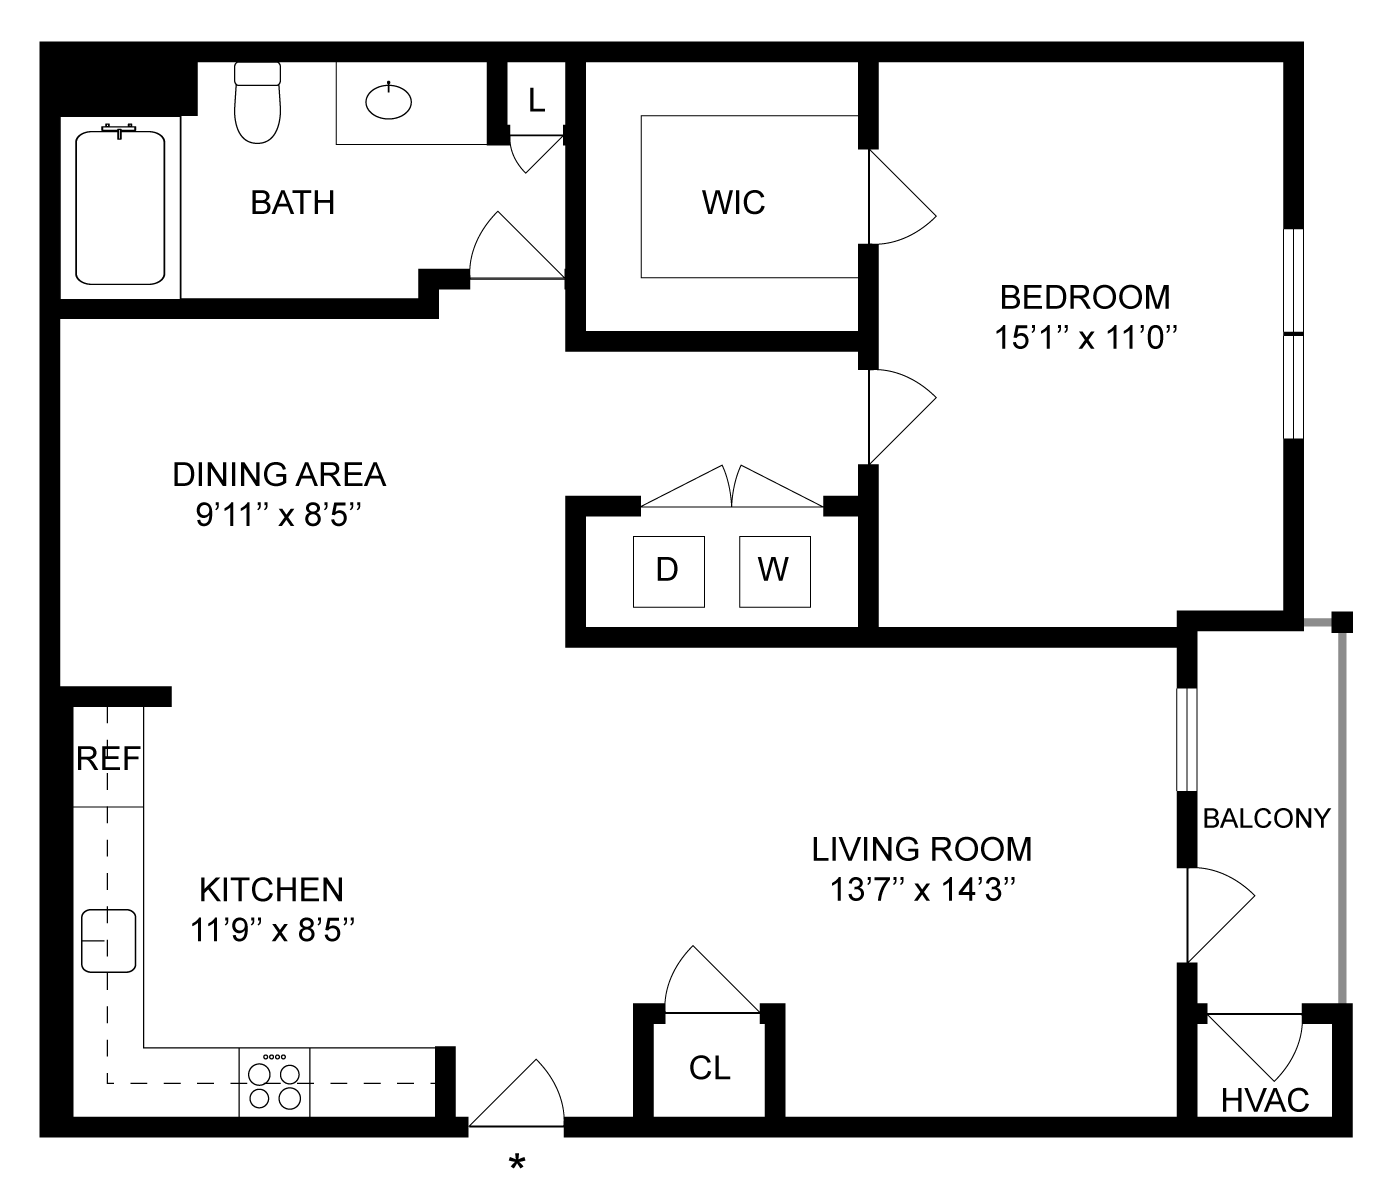 Floorplan for Apartment #08-C12, 1 bedroom unit at Halstead Hopkinton